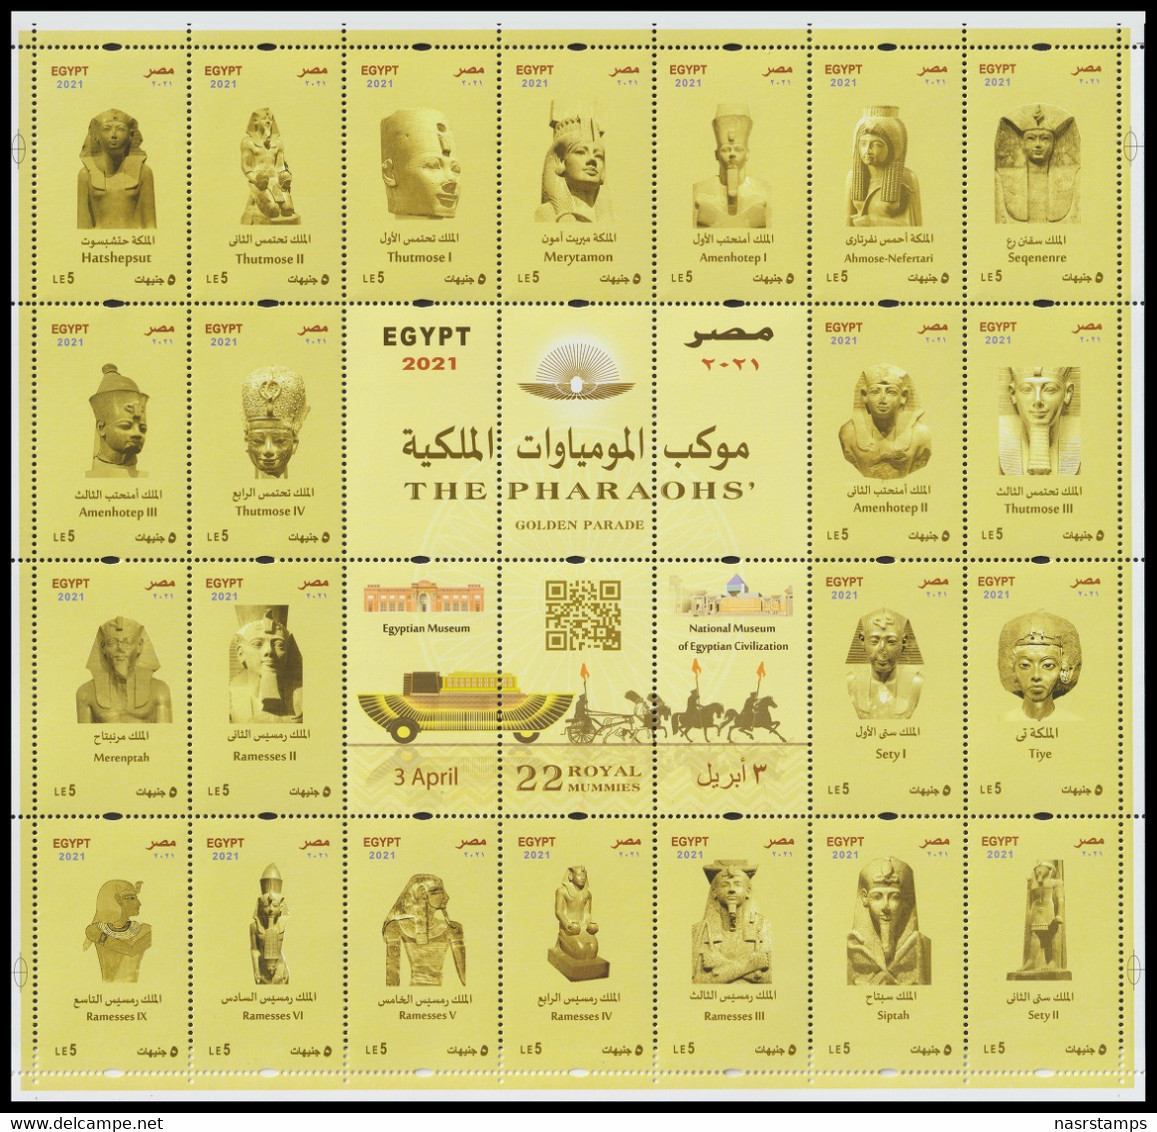 Egypt - 2021 - NEW - Mini Sheet - ( THE PHARAOHS Golden Parade - 3 April 2021 ) - MNH (**) - Ungebraucht